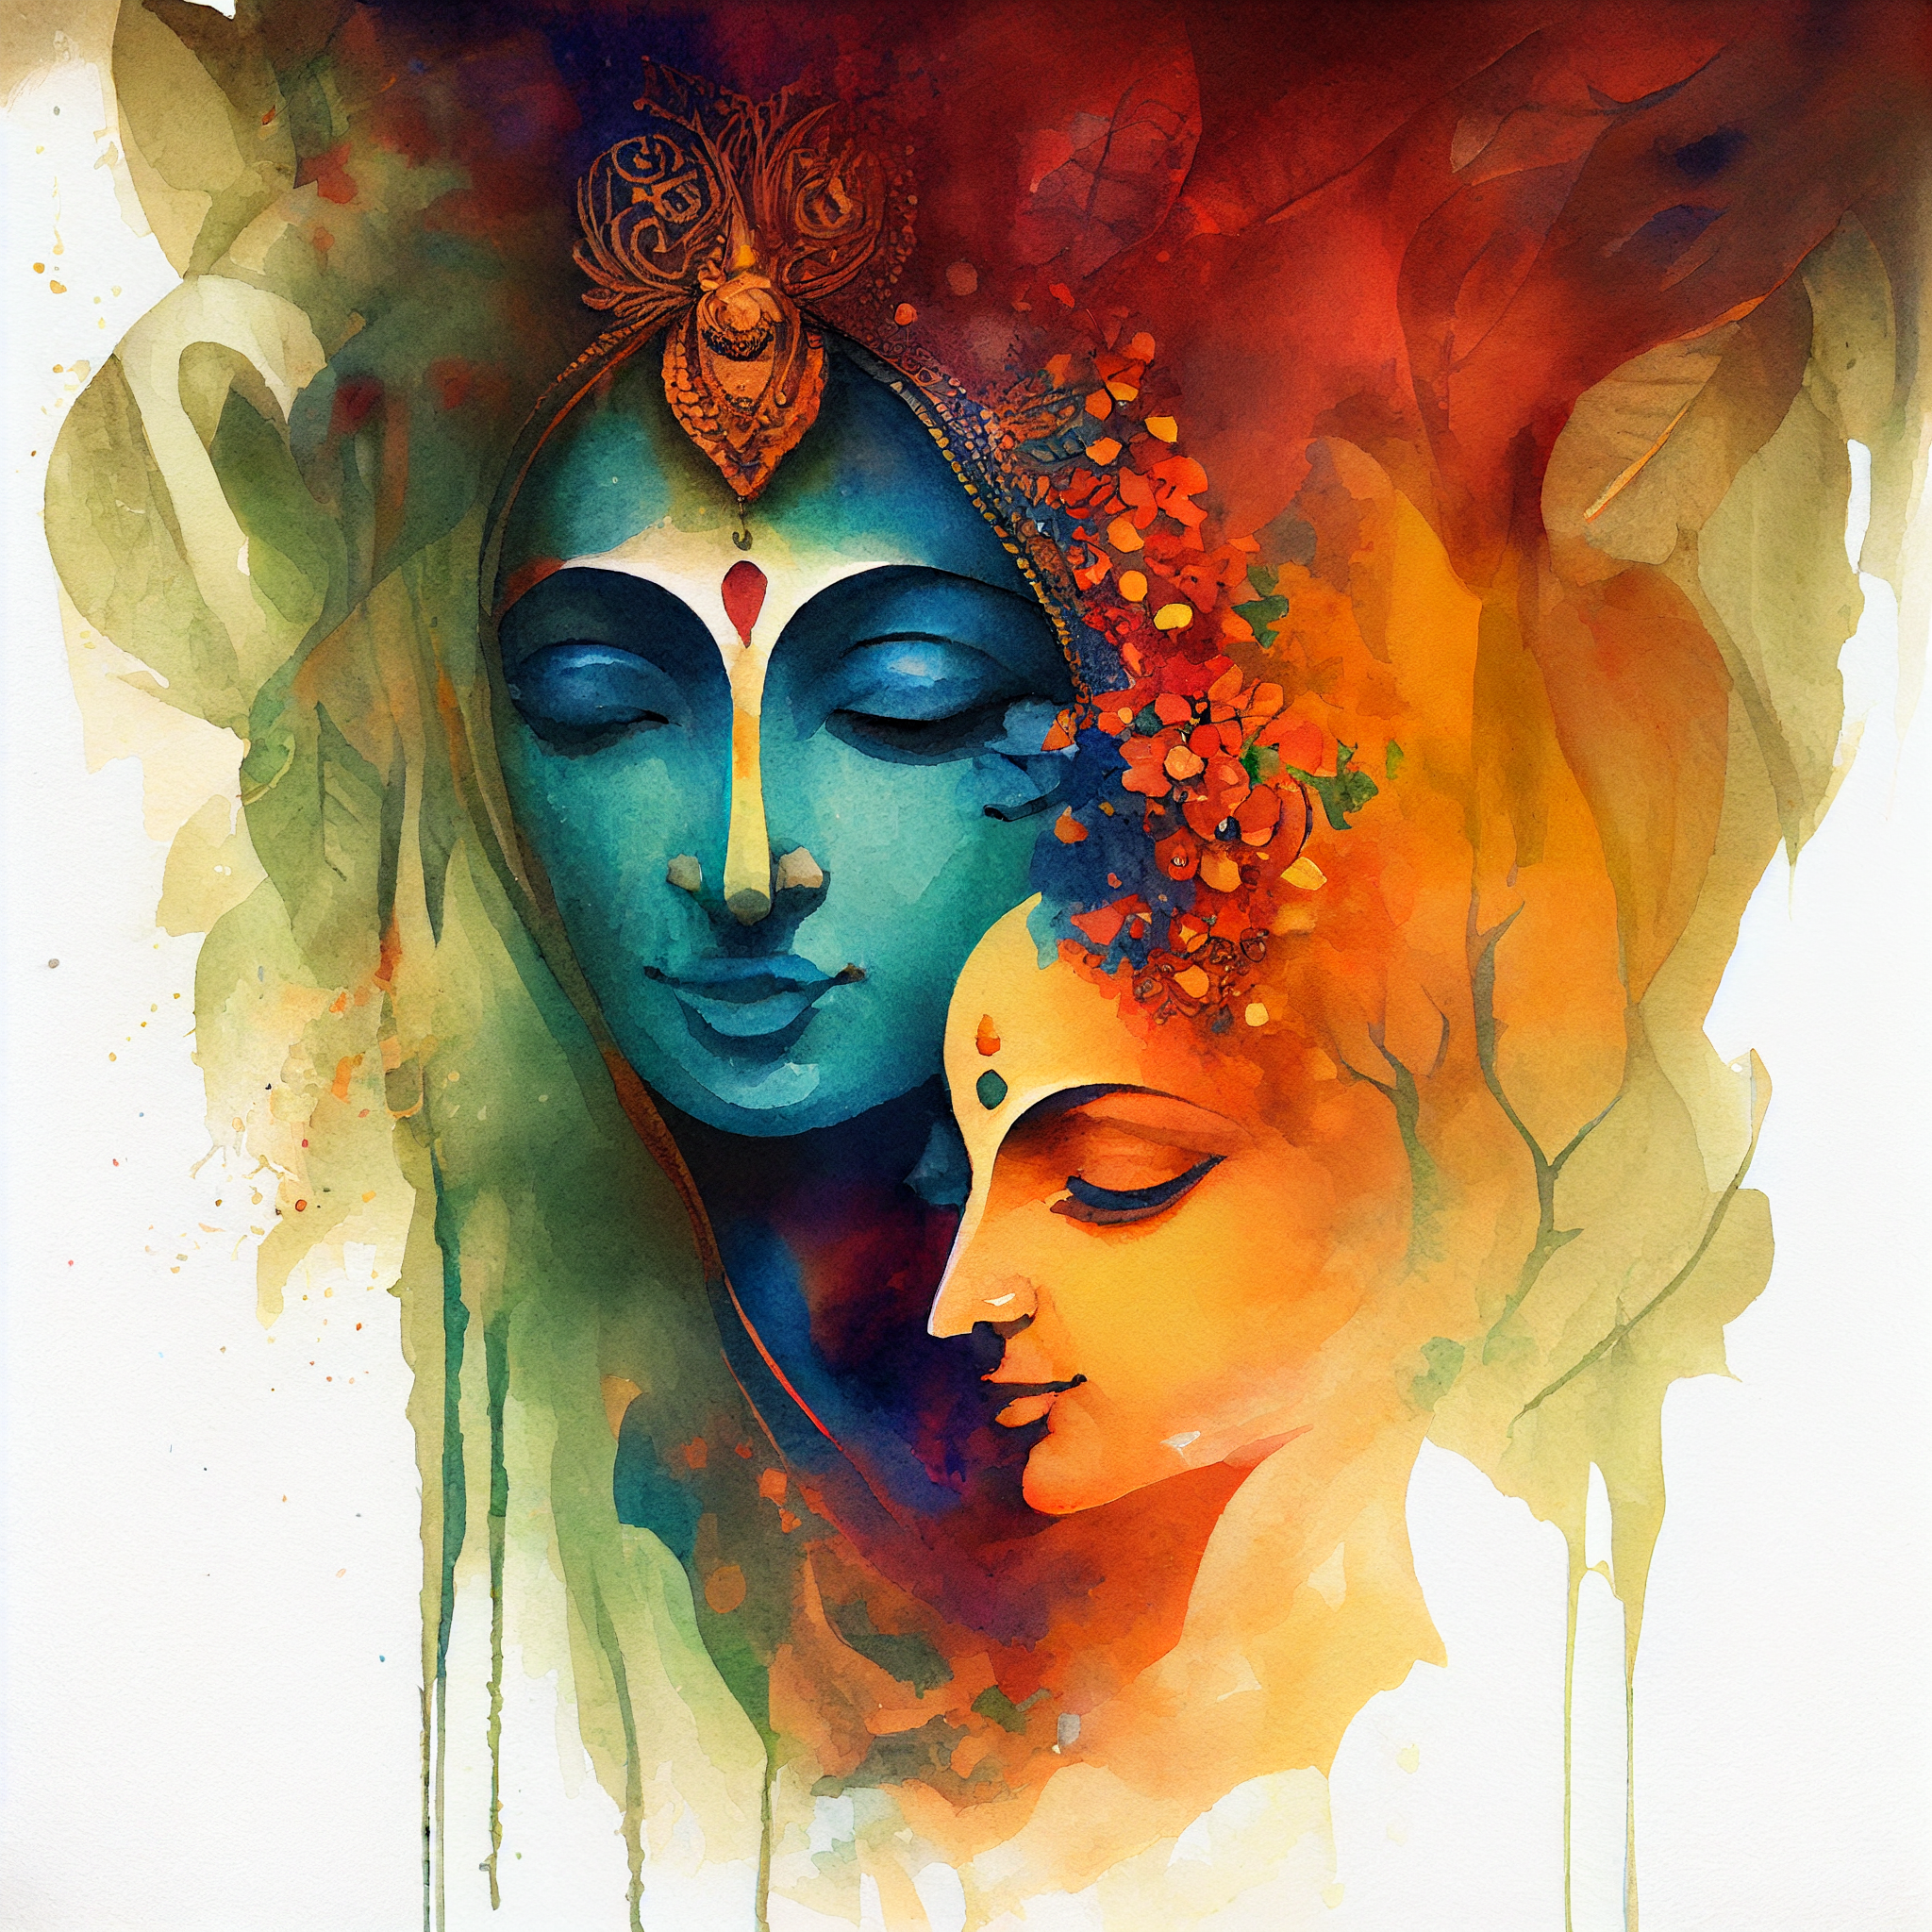 Divine Grace: A Modern Watercolor Portrait Print of Radha Krishna